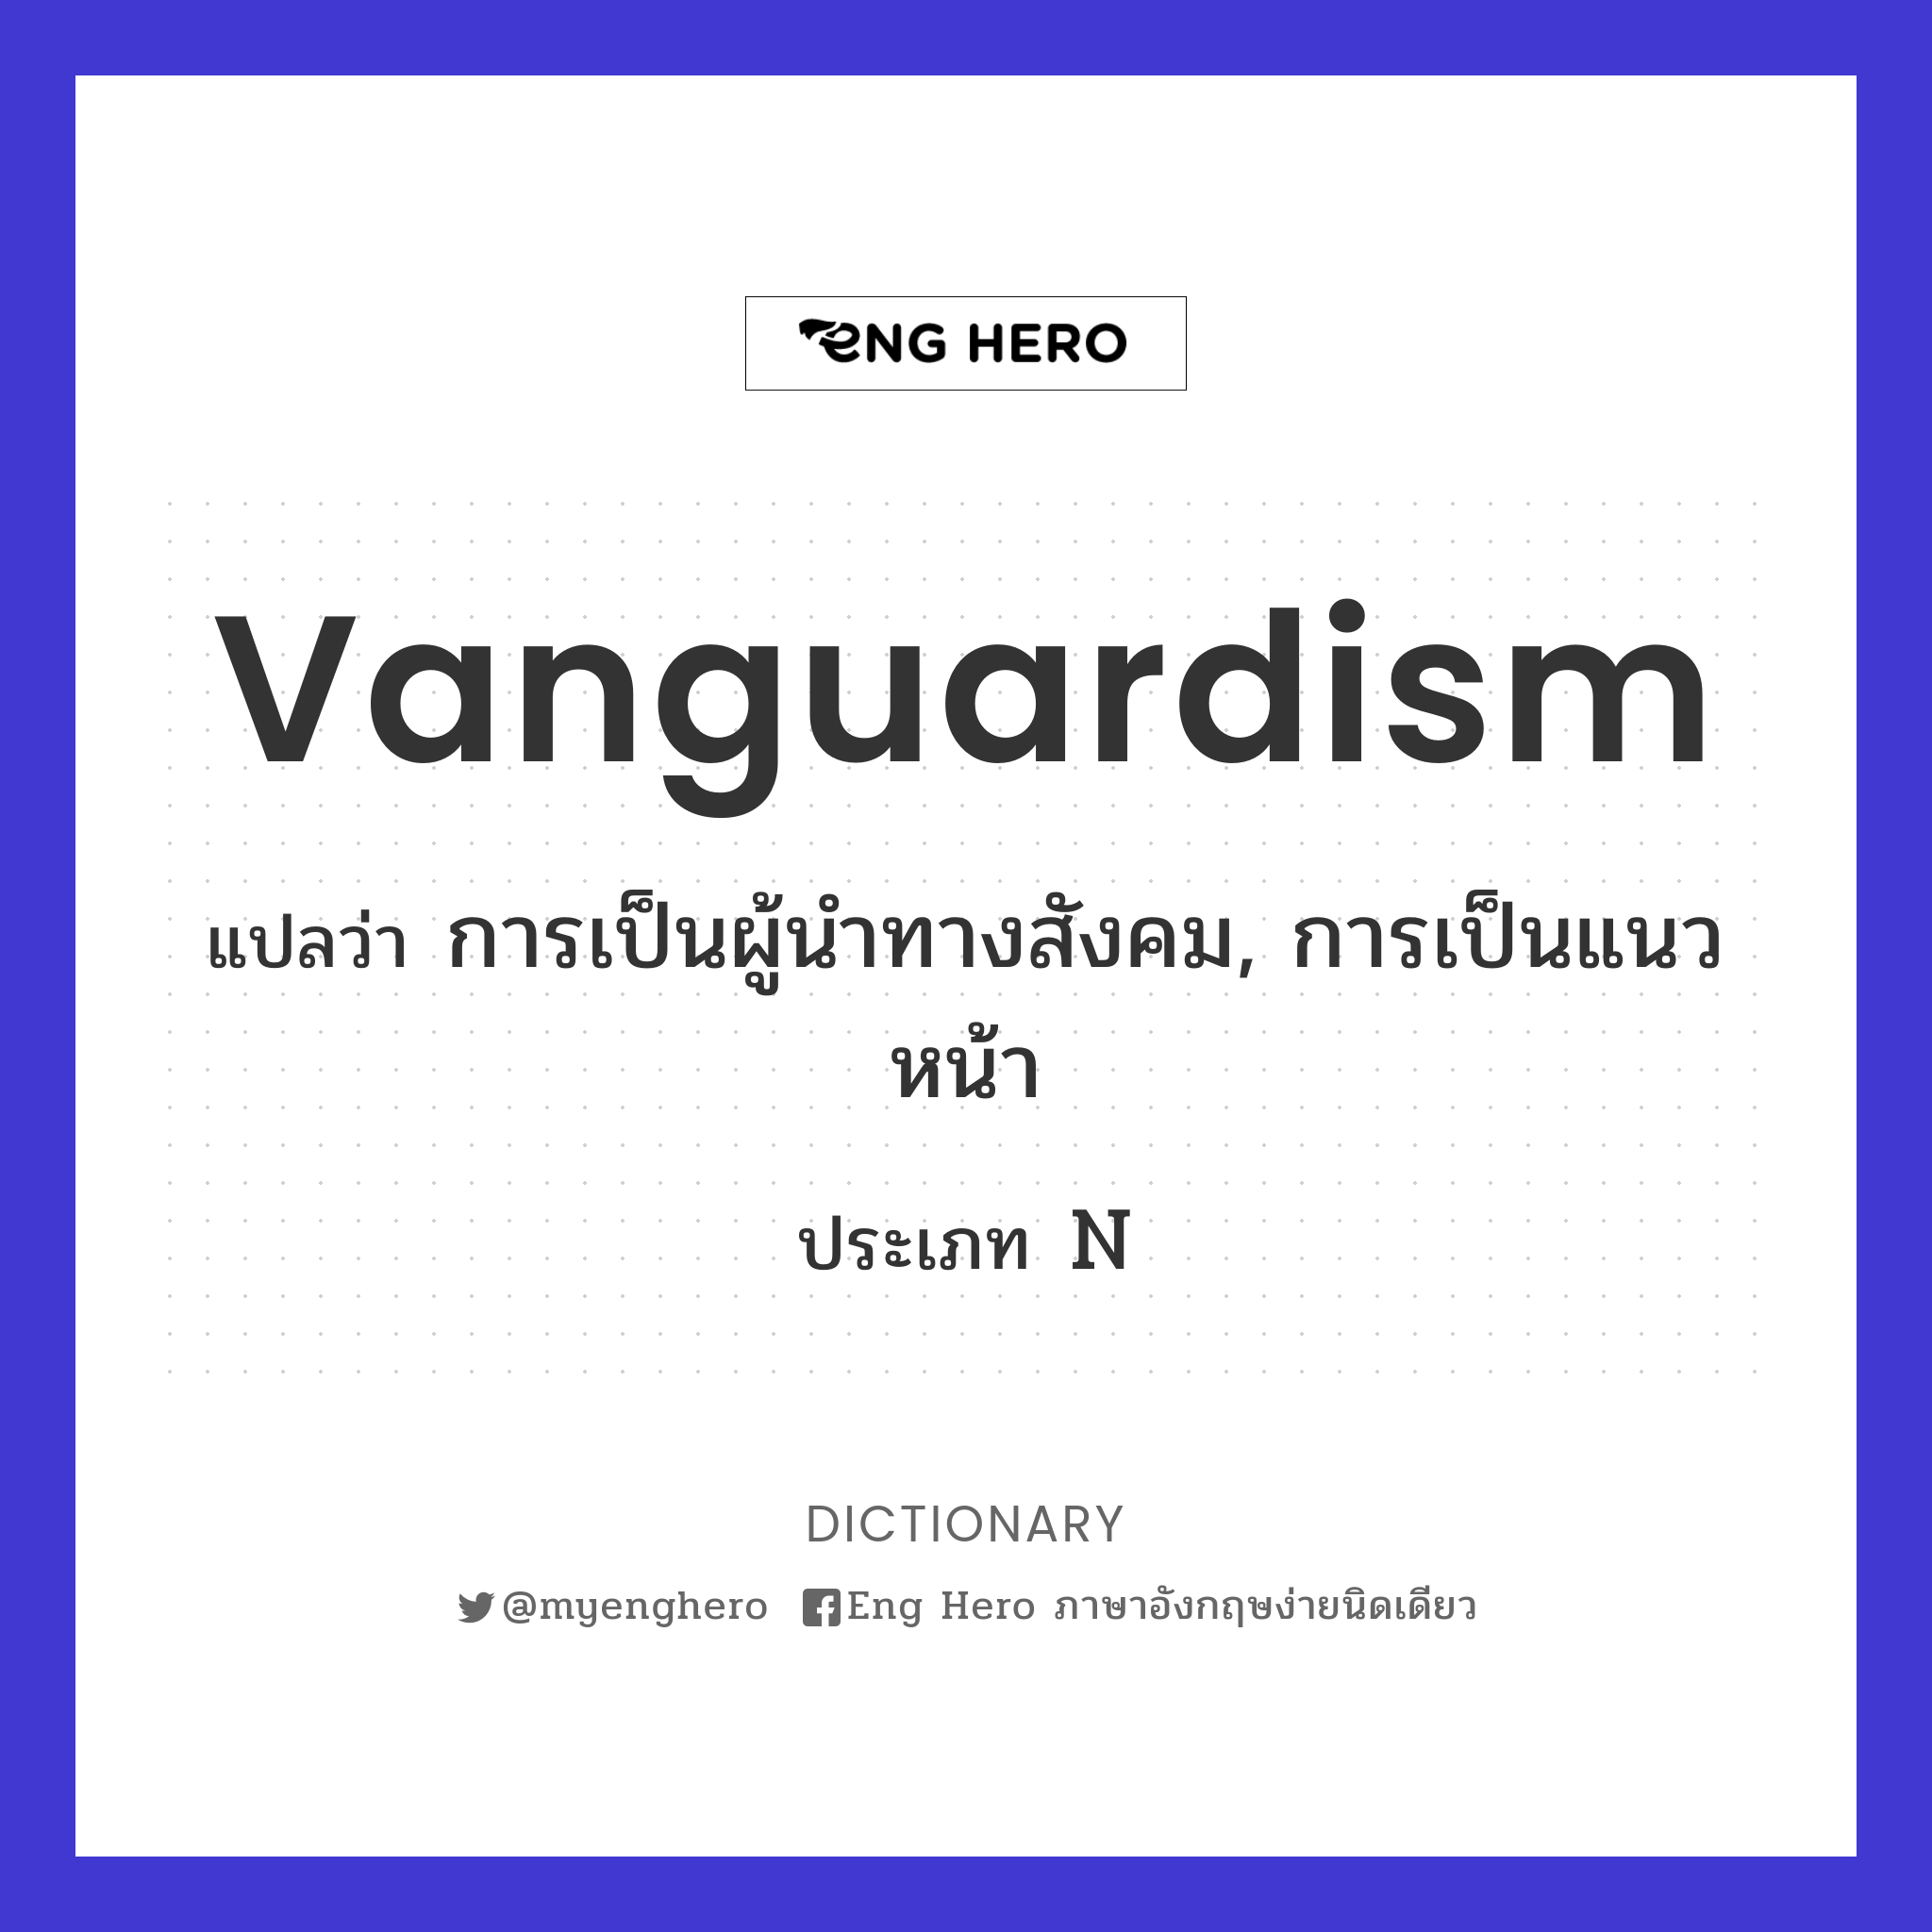 vanguardism